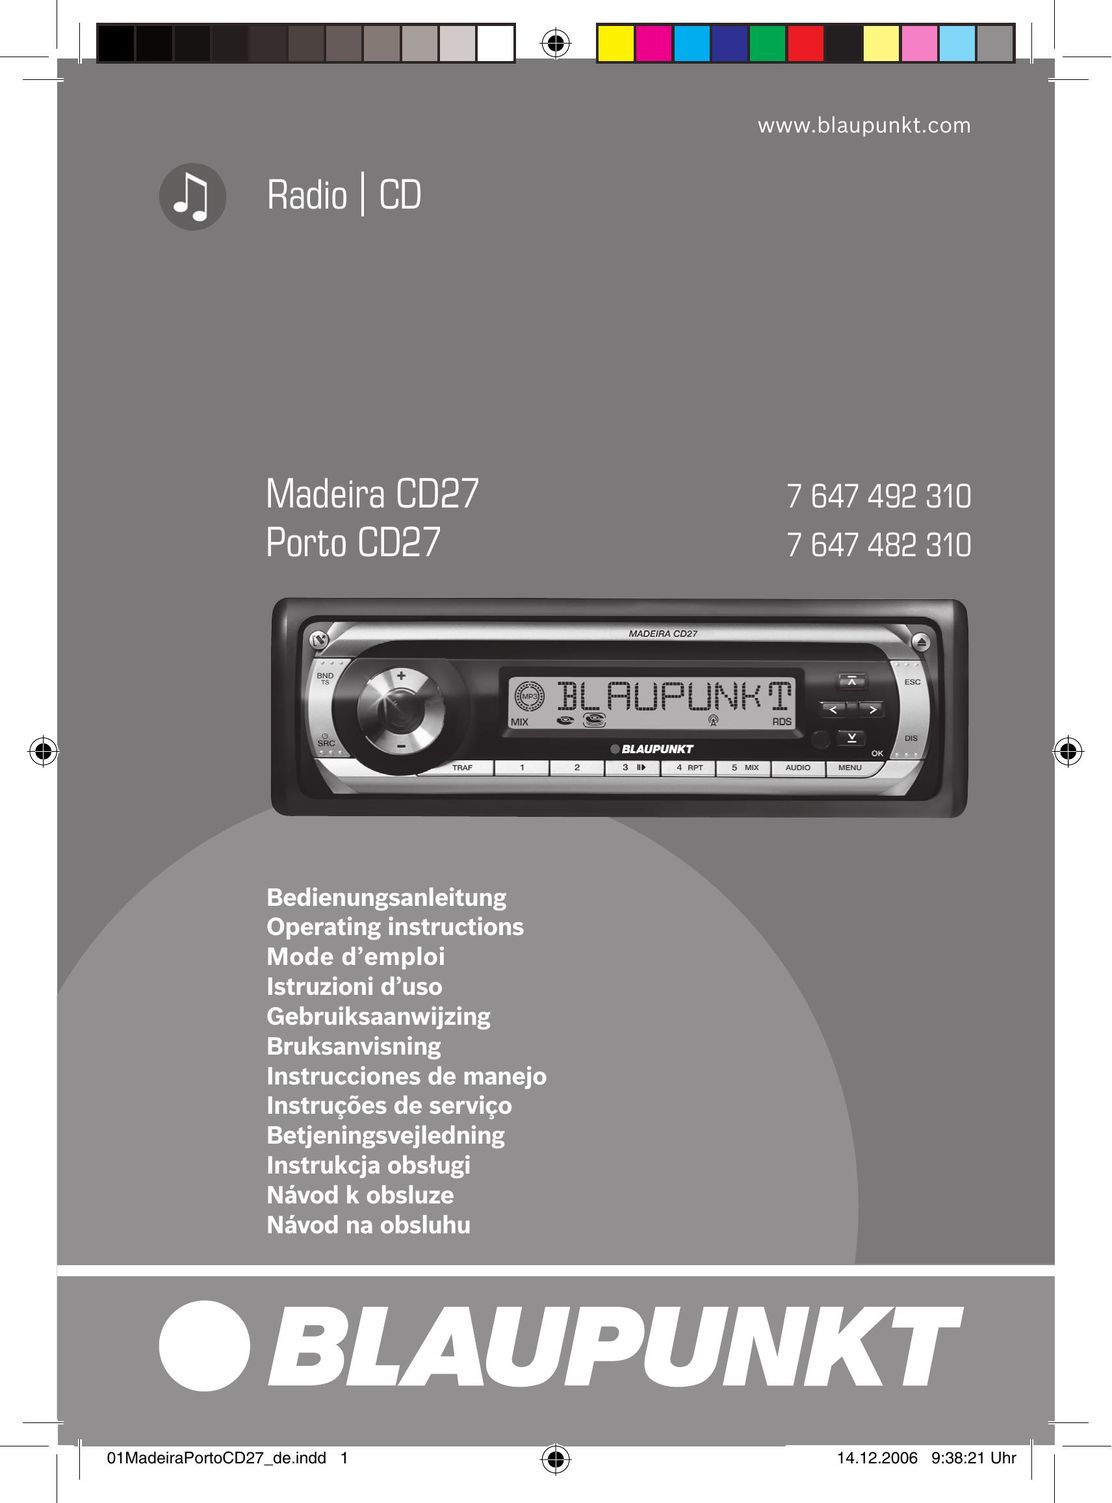 Blaupunkt 7 647 492 310 Car Stereo System User Manual